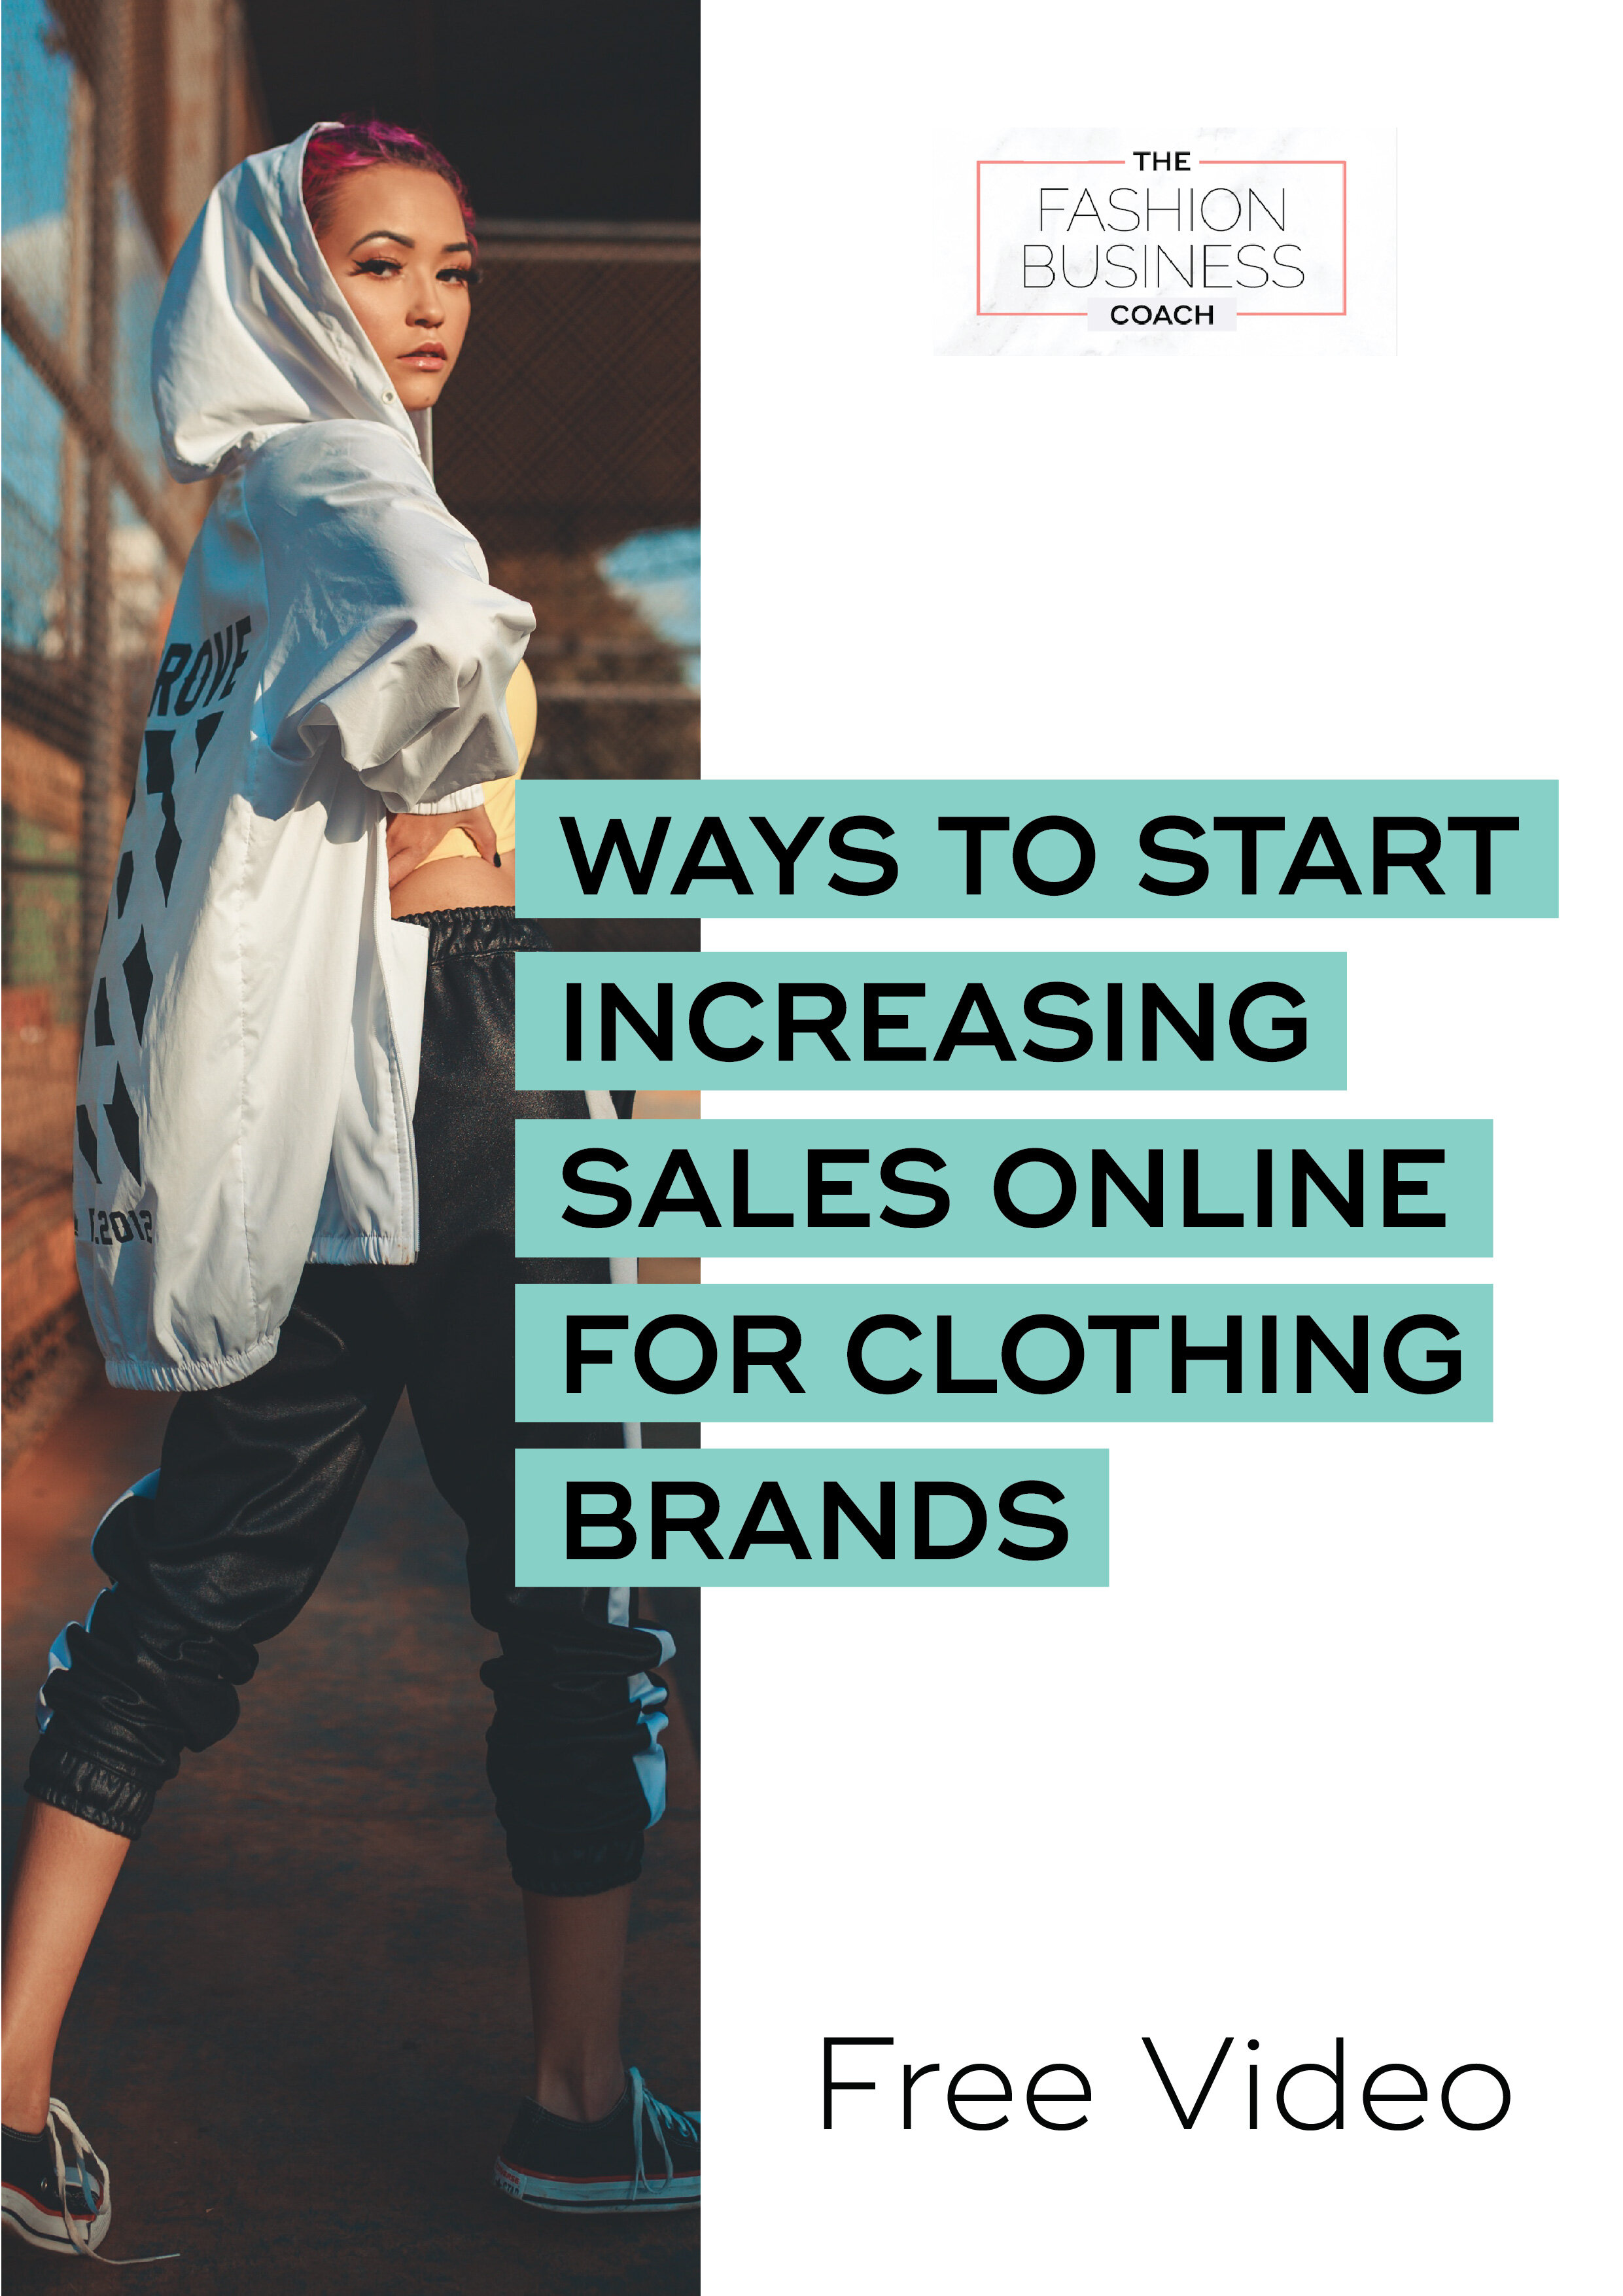 Ways to Start Increasing Sales Online For Clothing Brands1.jpg